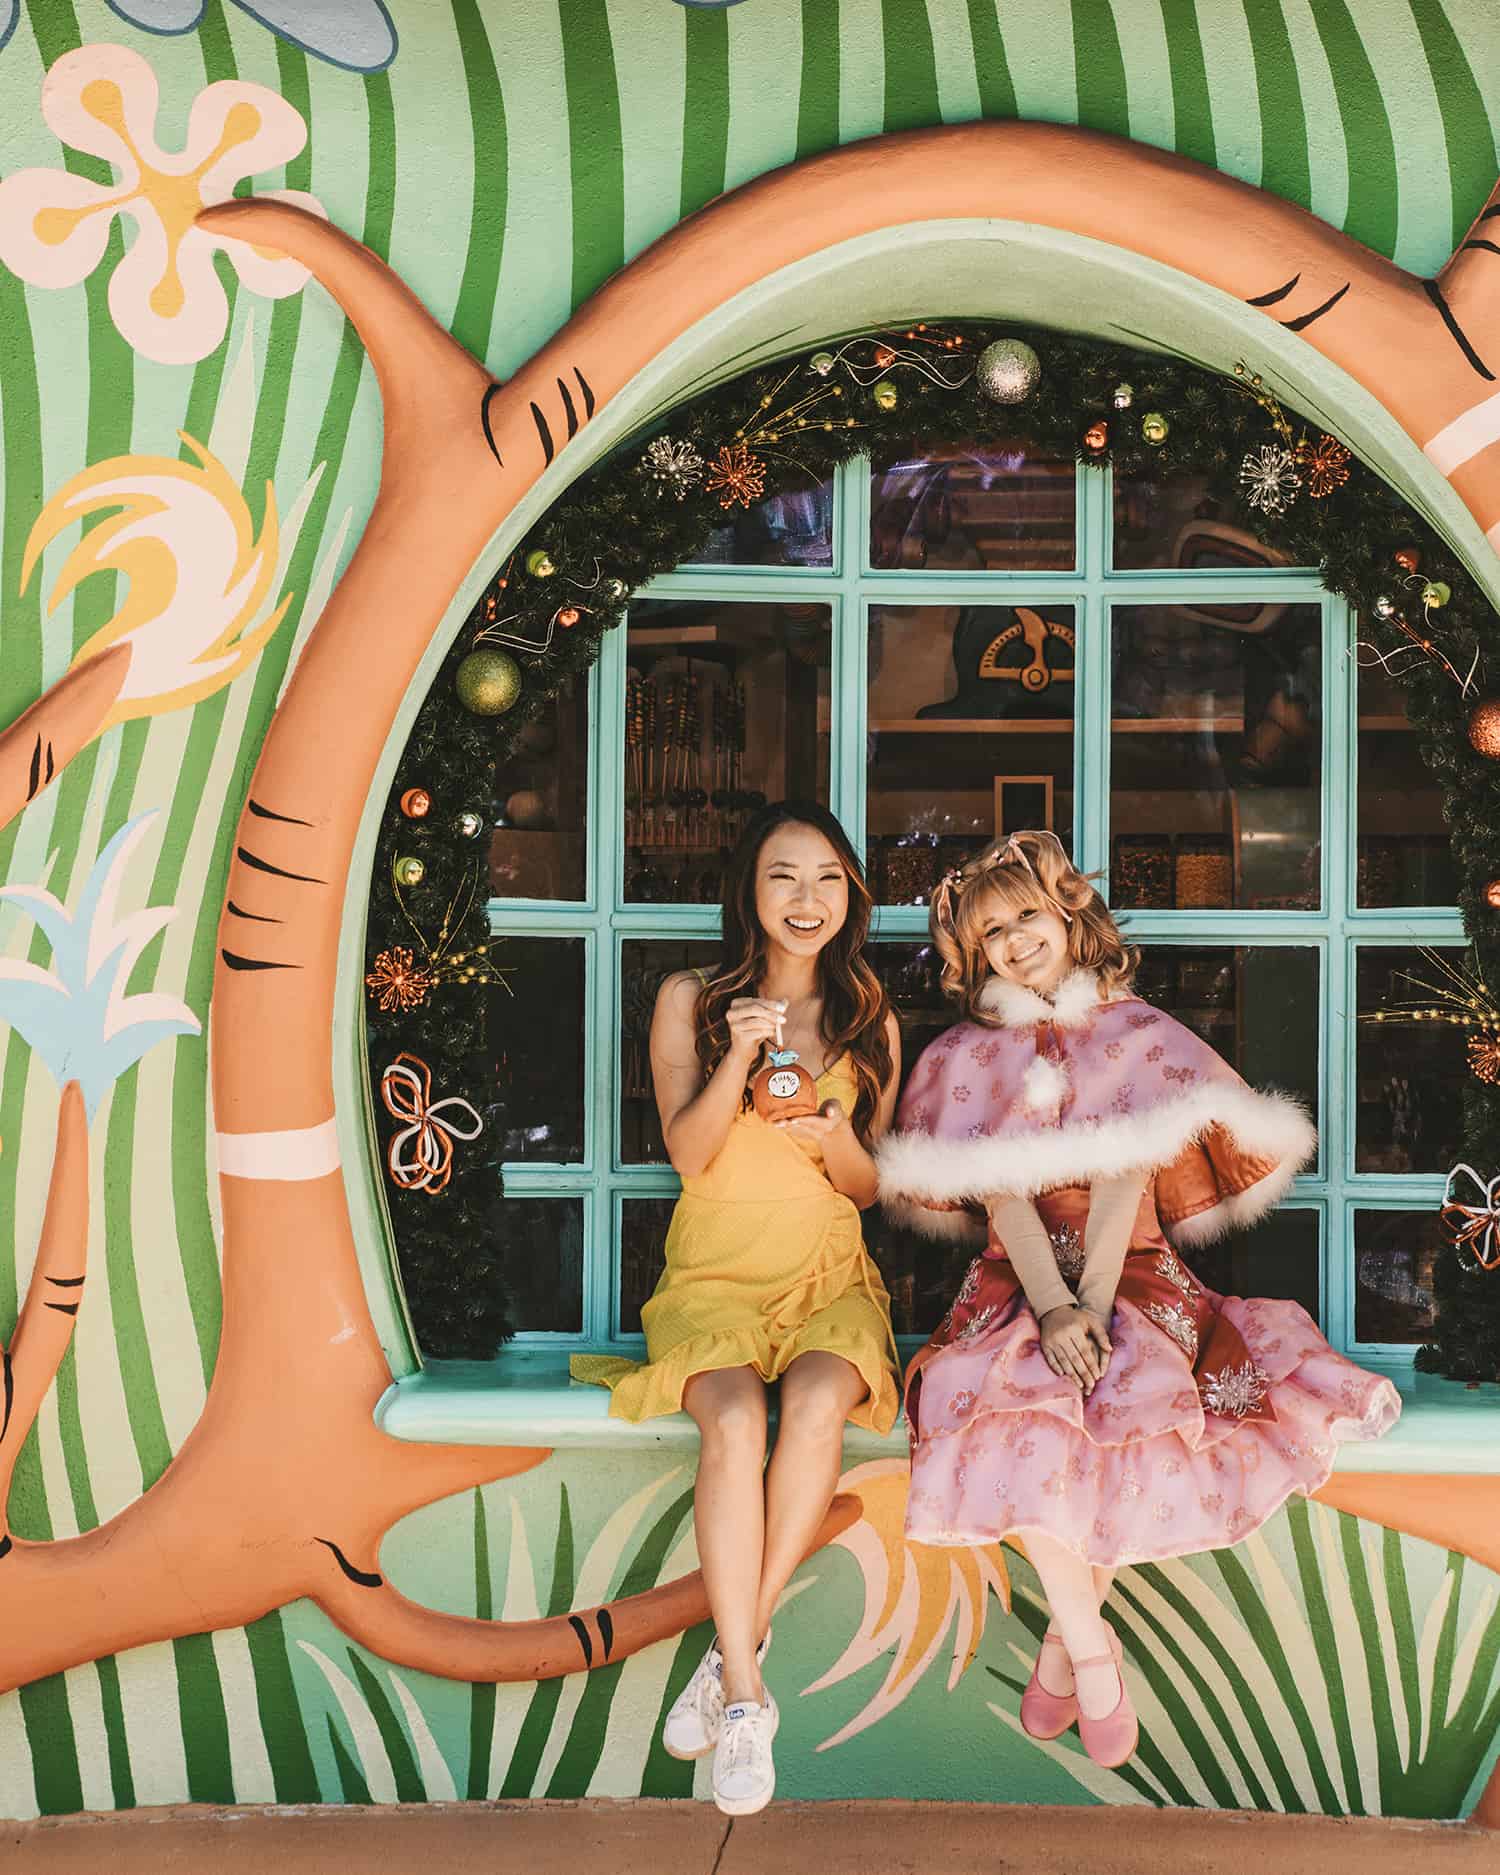 Seuss Landing at Universal Orlando Resort